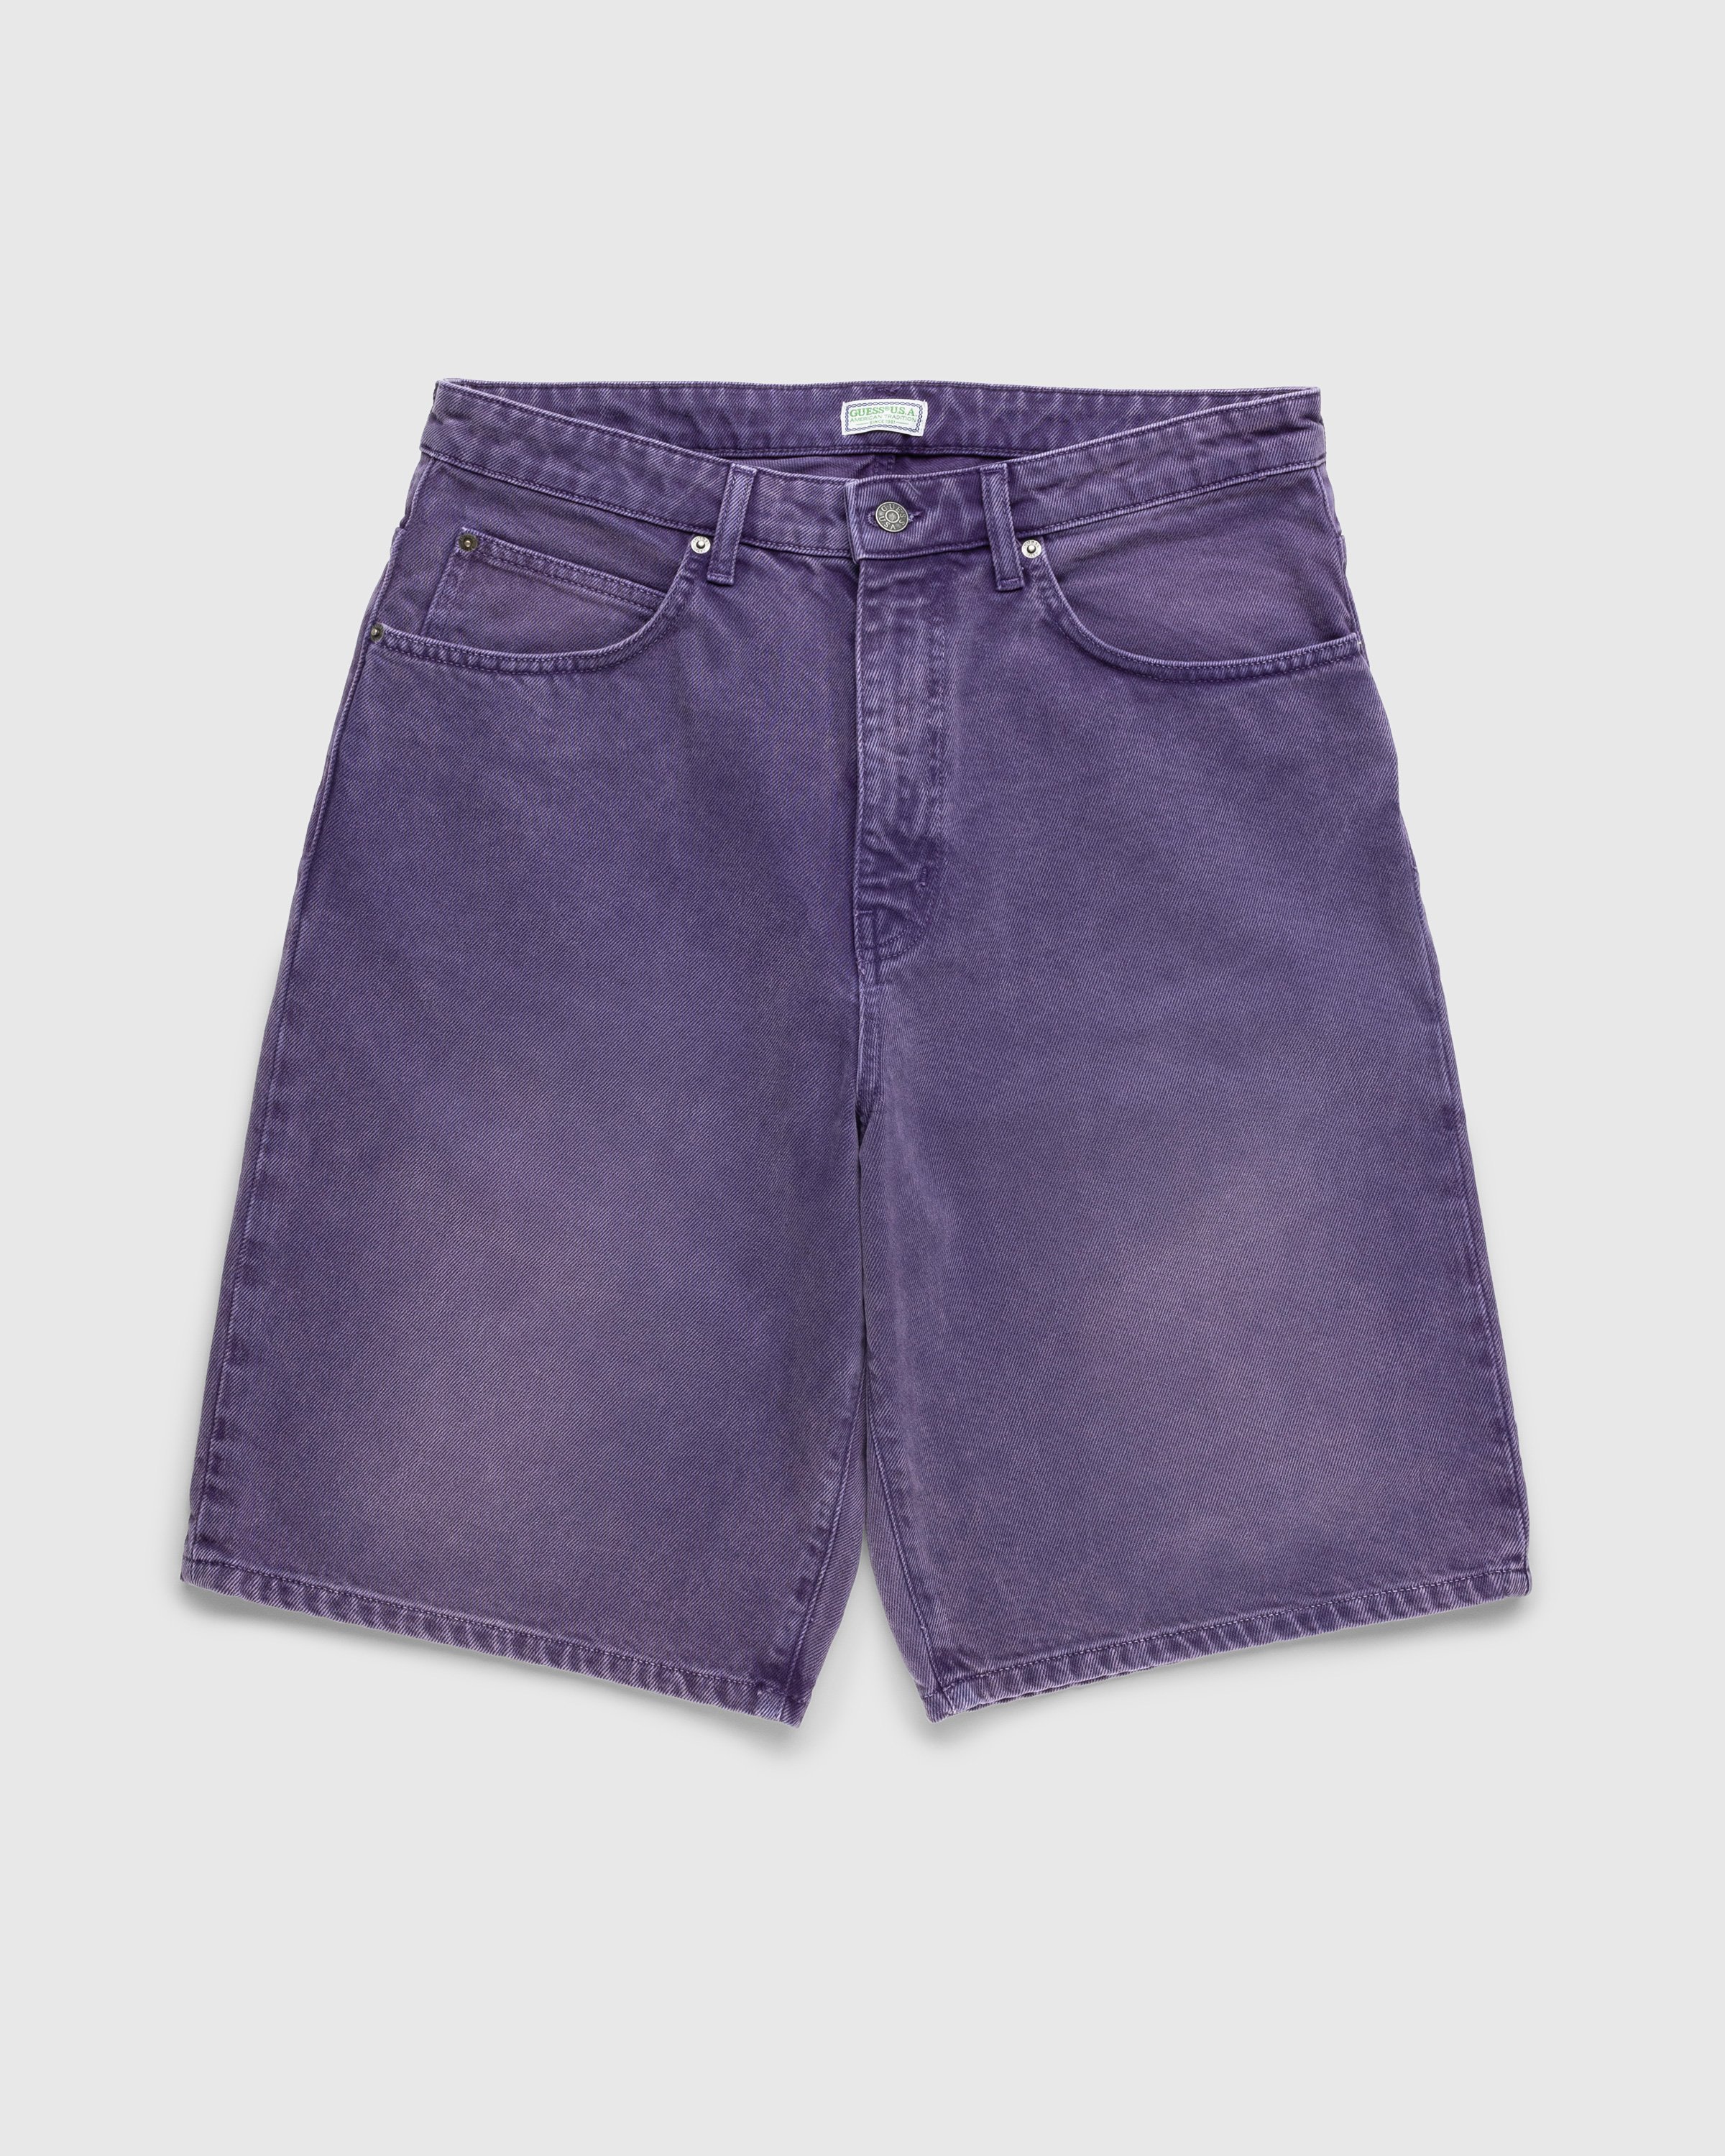 Guess USA - Vintage Denim Short Purple - Clothing - Purple - Image 1